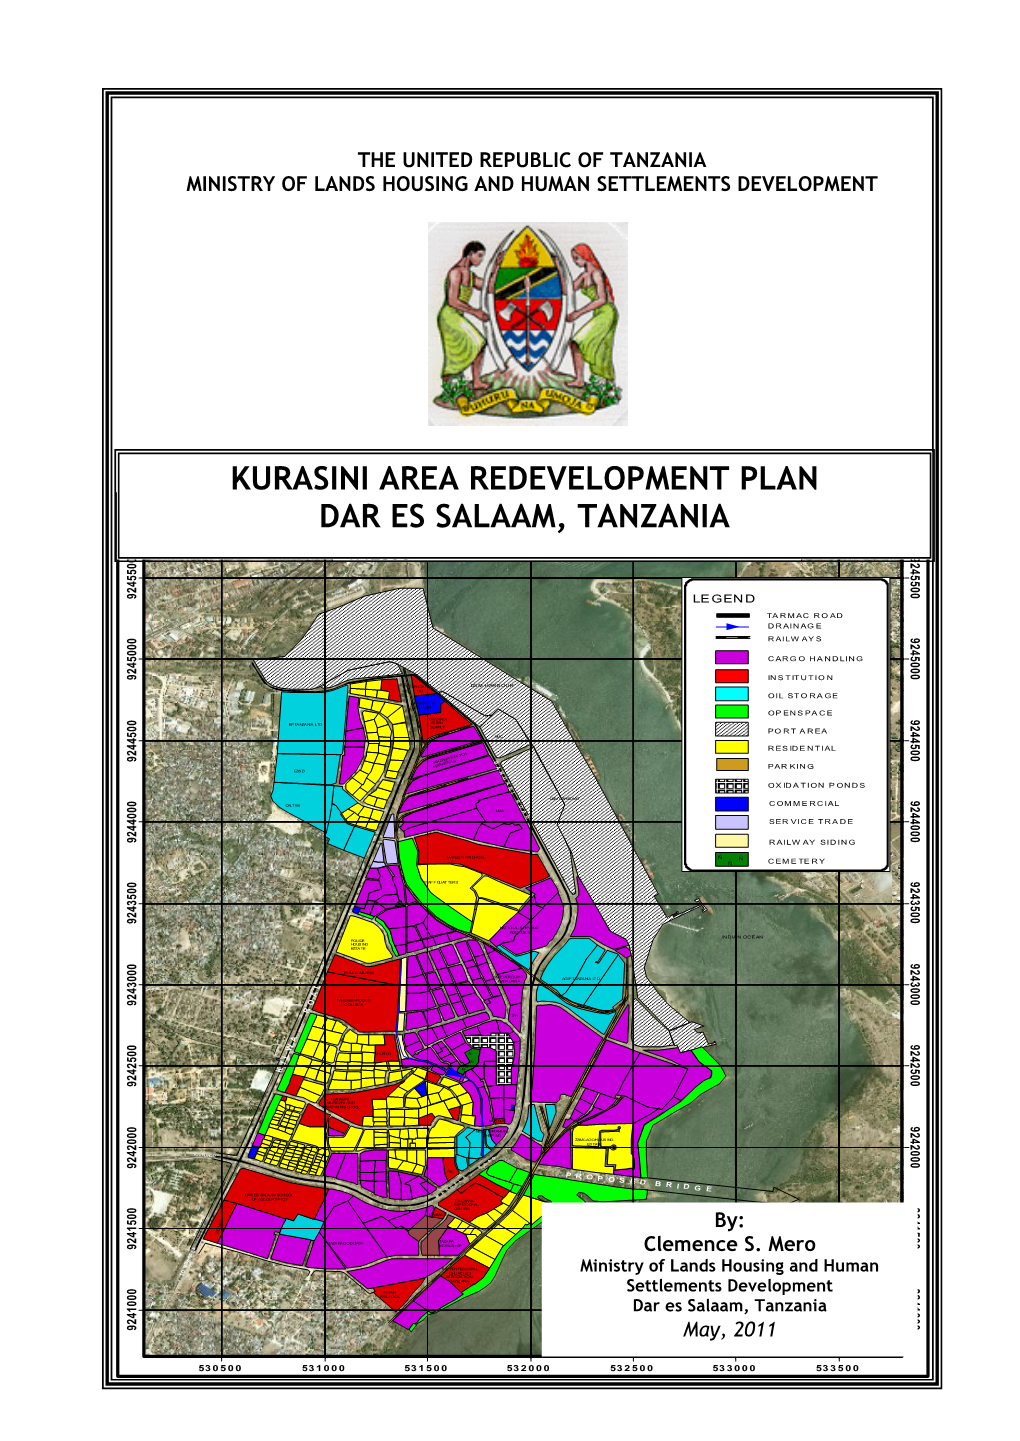 Kurasini Area Redevelopment Plan Dar Es Salaam, Tanzania